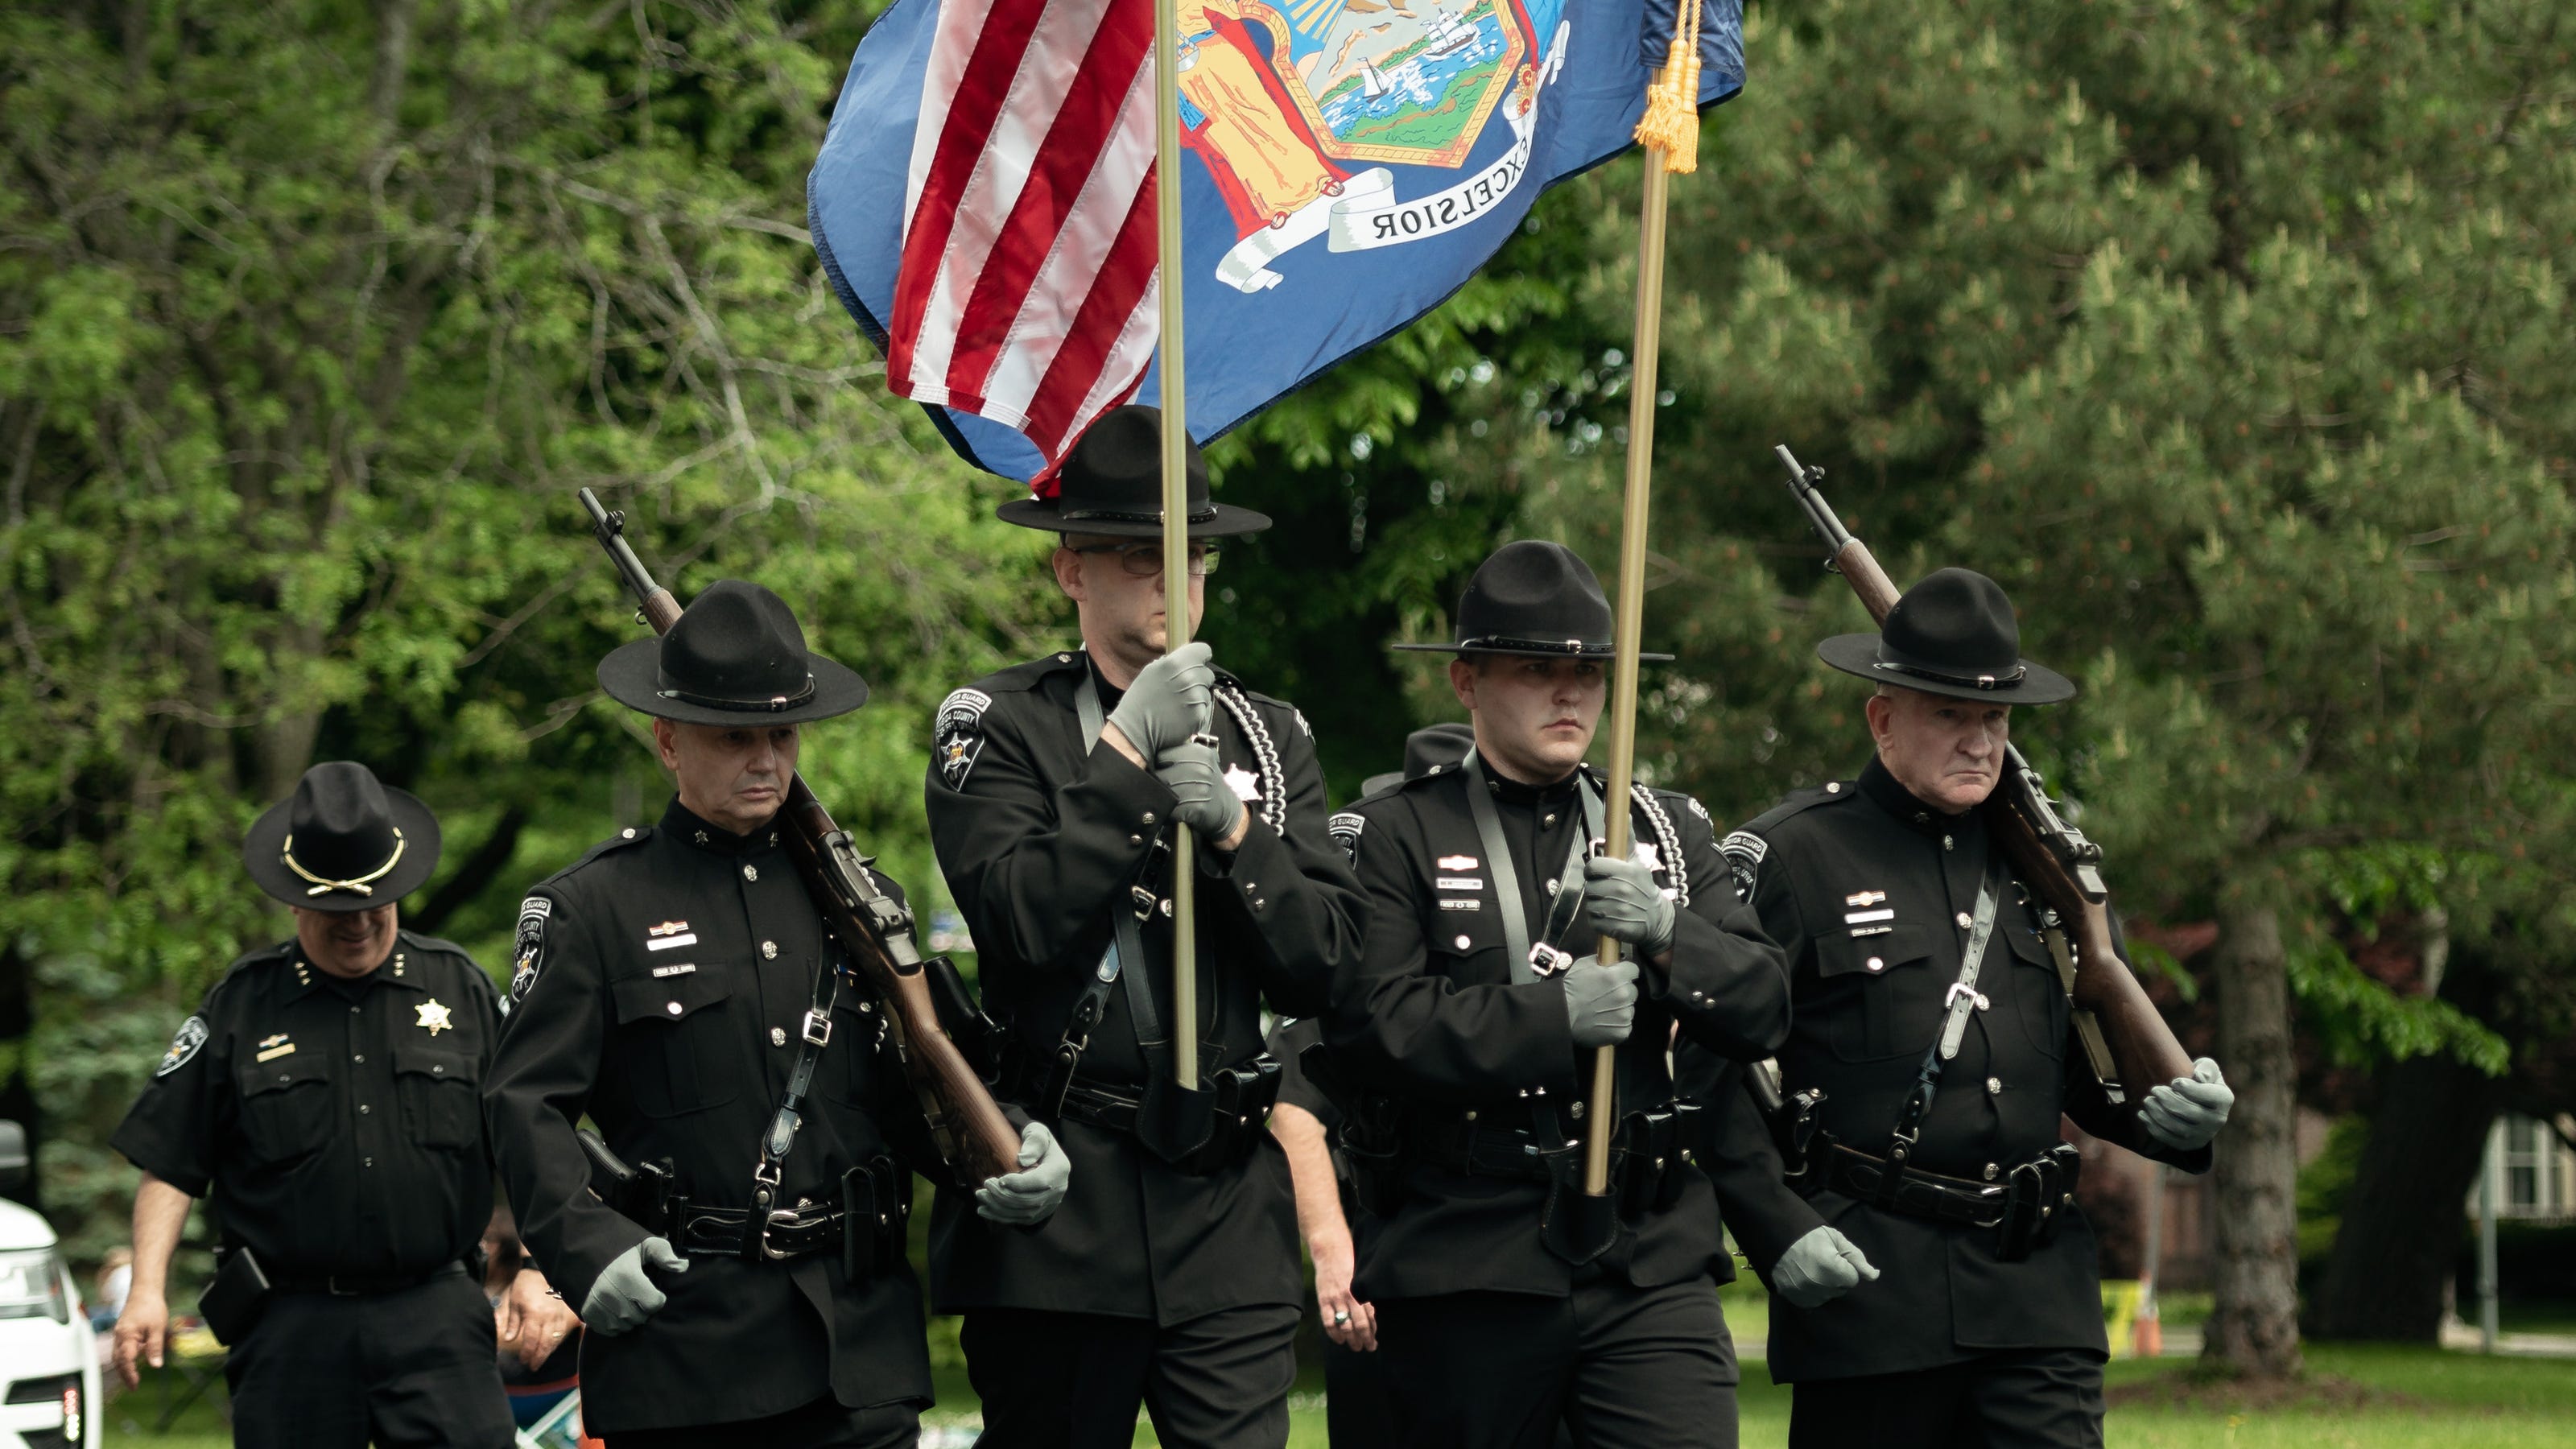 Utica Memorial Day parade, services honor fallen military